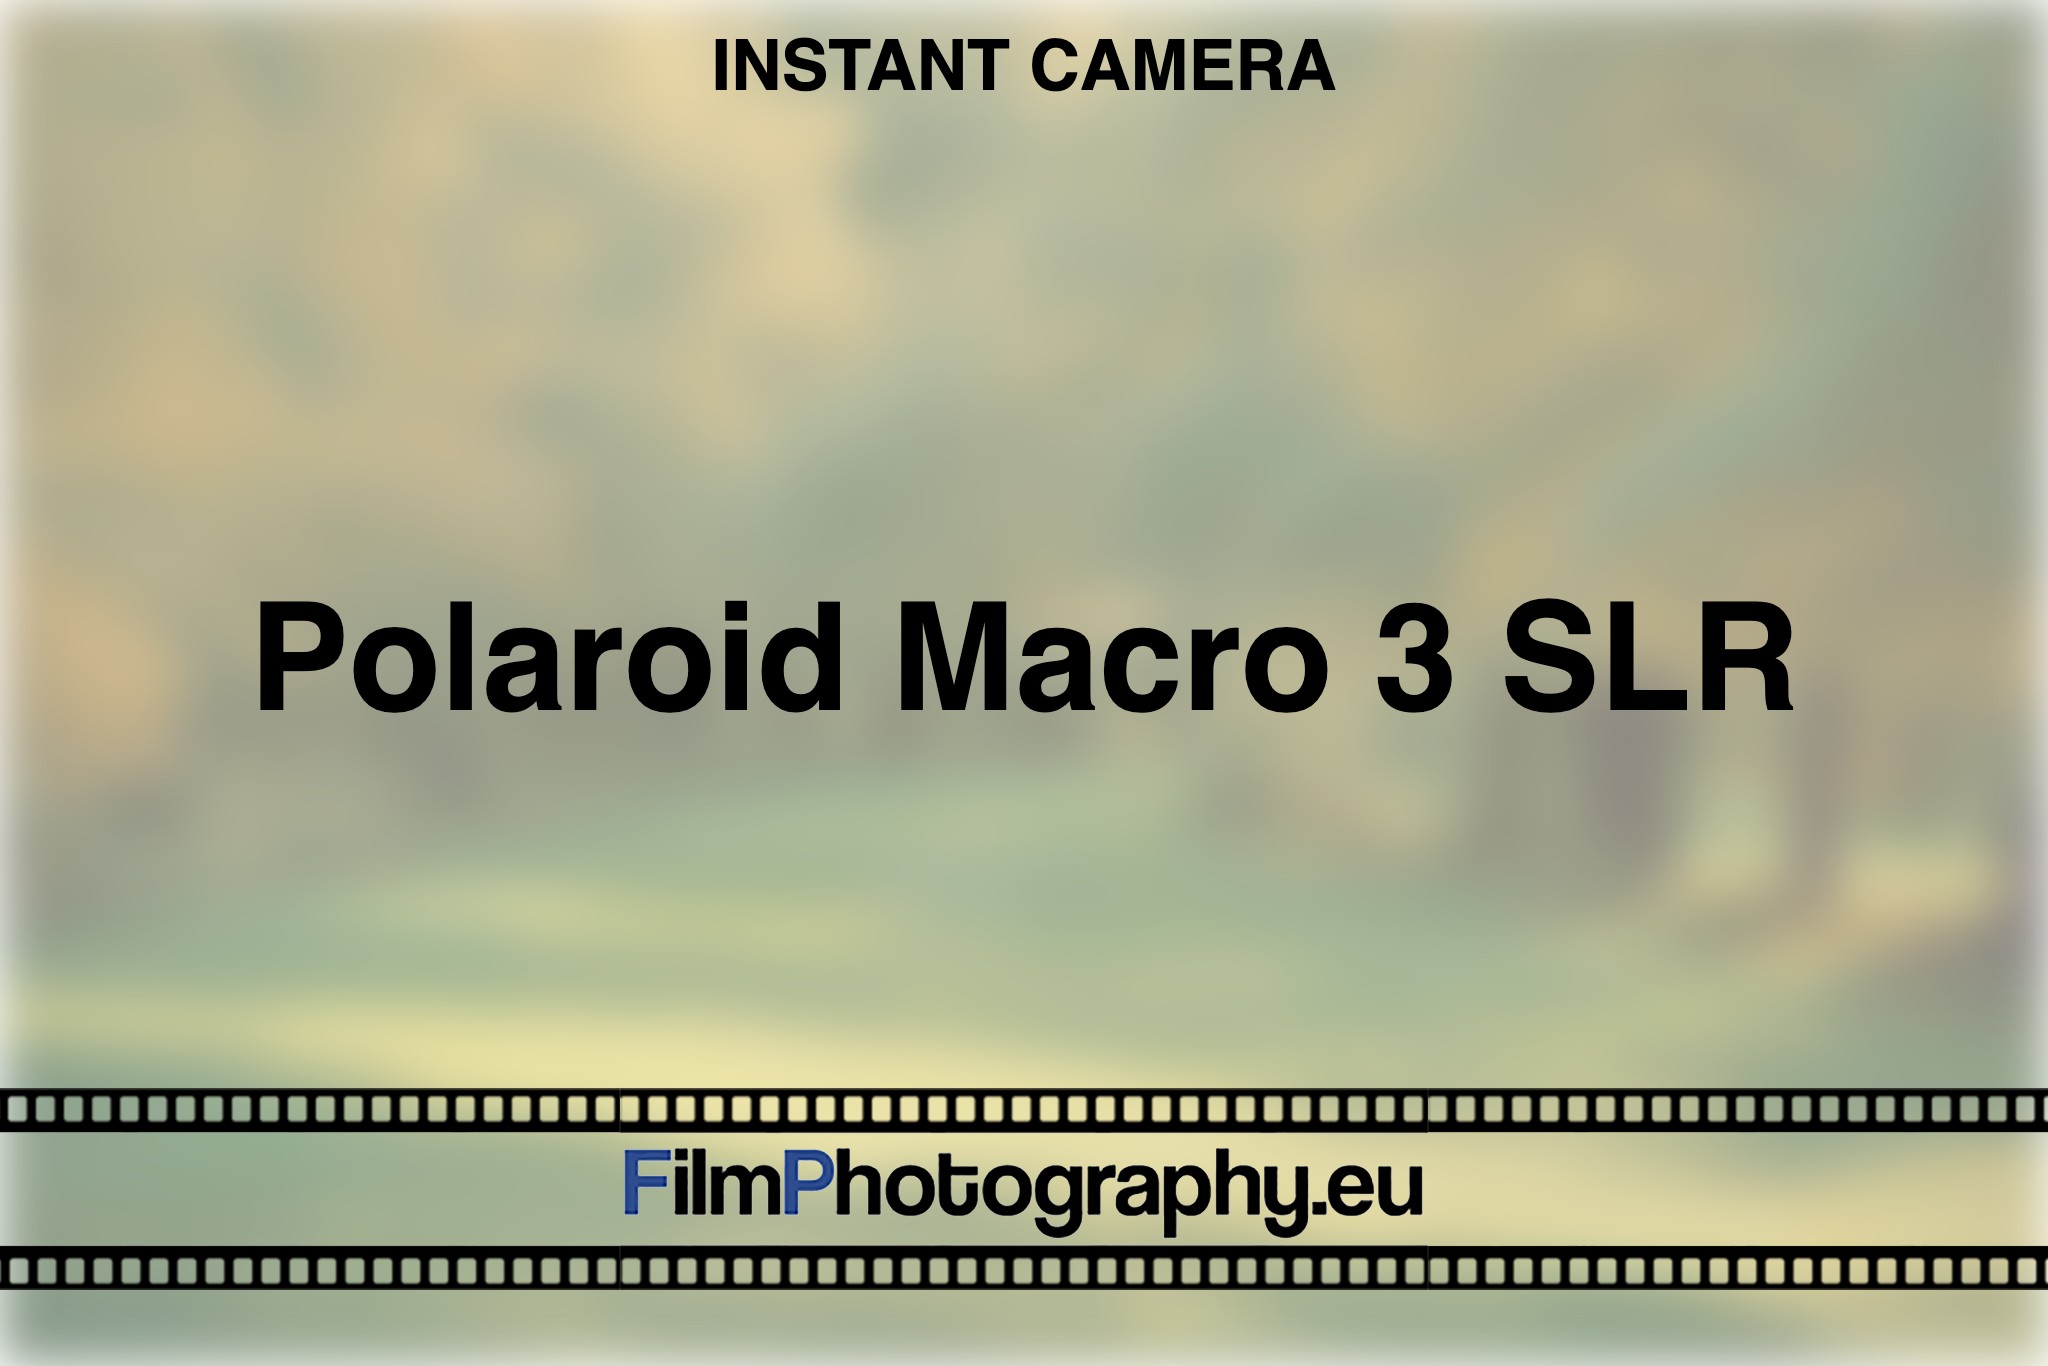 polaroid-macro-3-slr-instant-camera-bnv